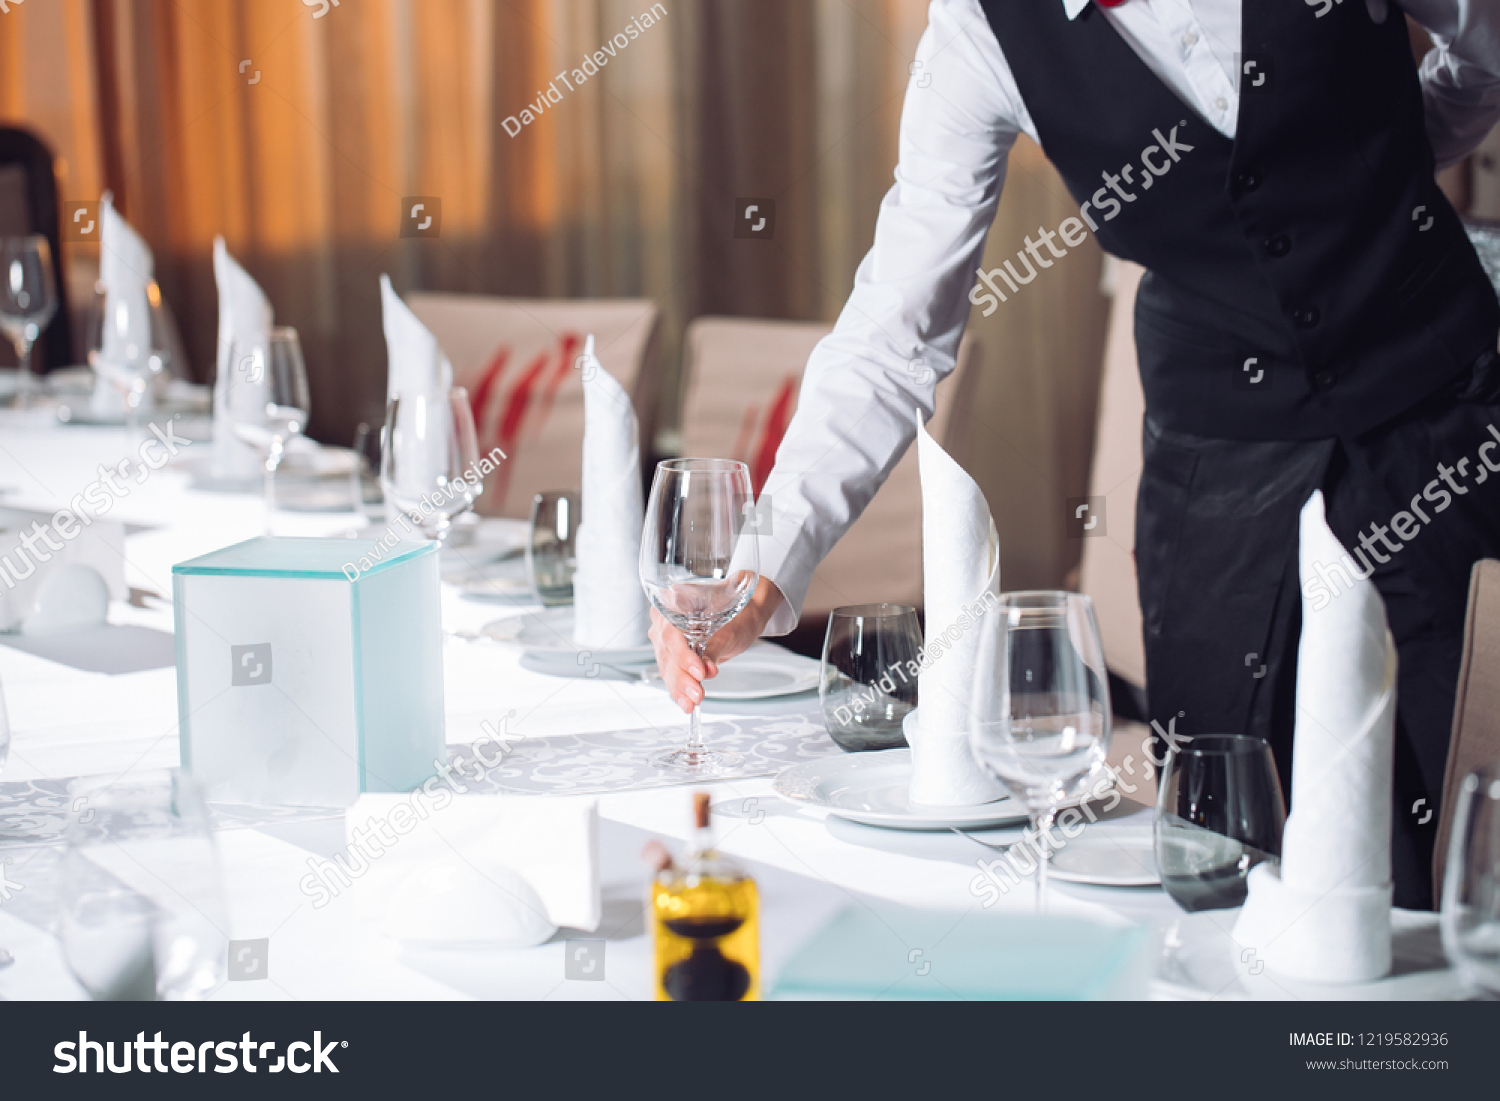 Сервировка стола официантом